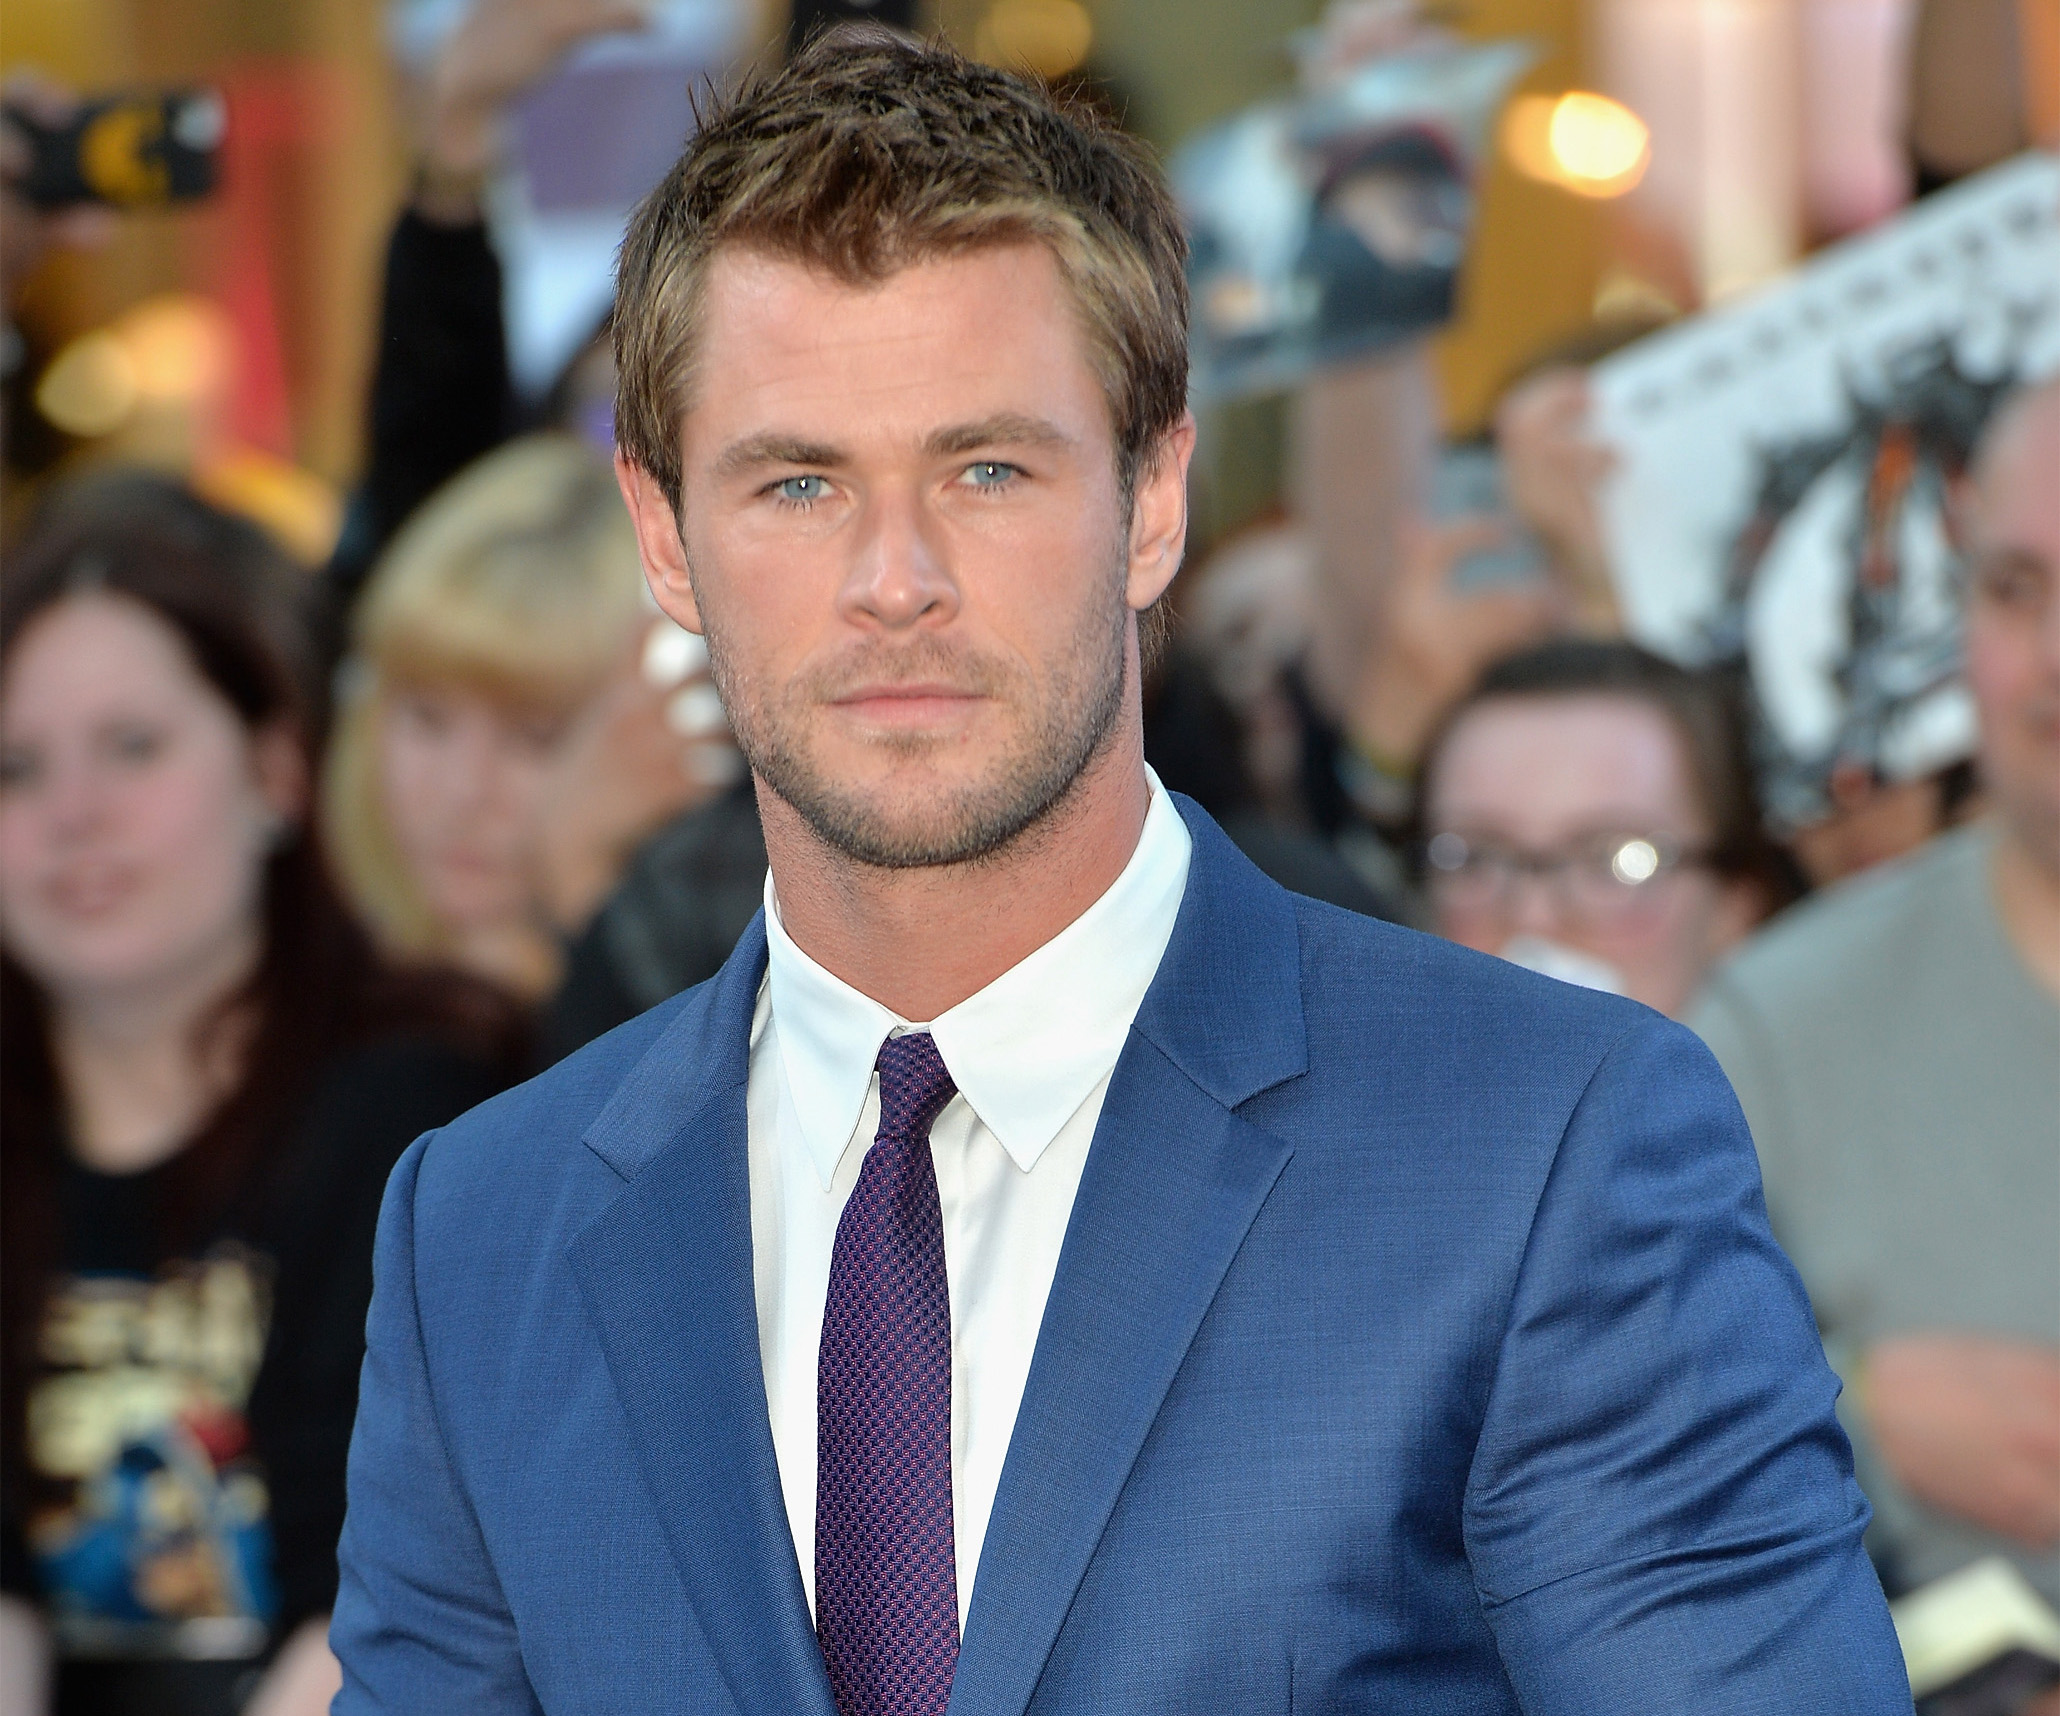 Is Chris Hemsworth the new Bond?